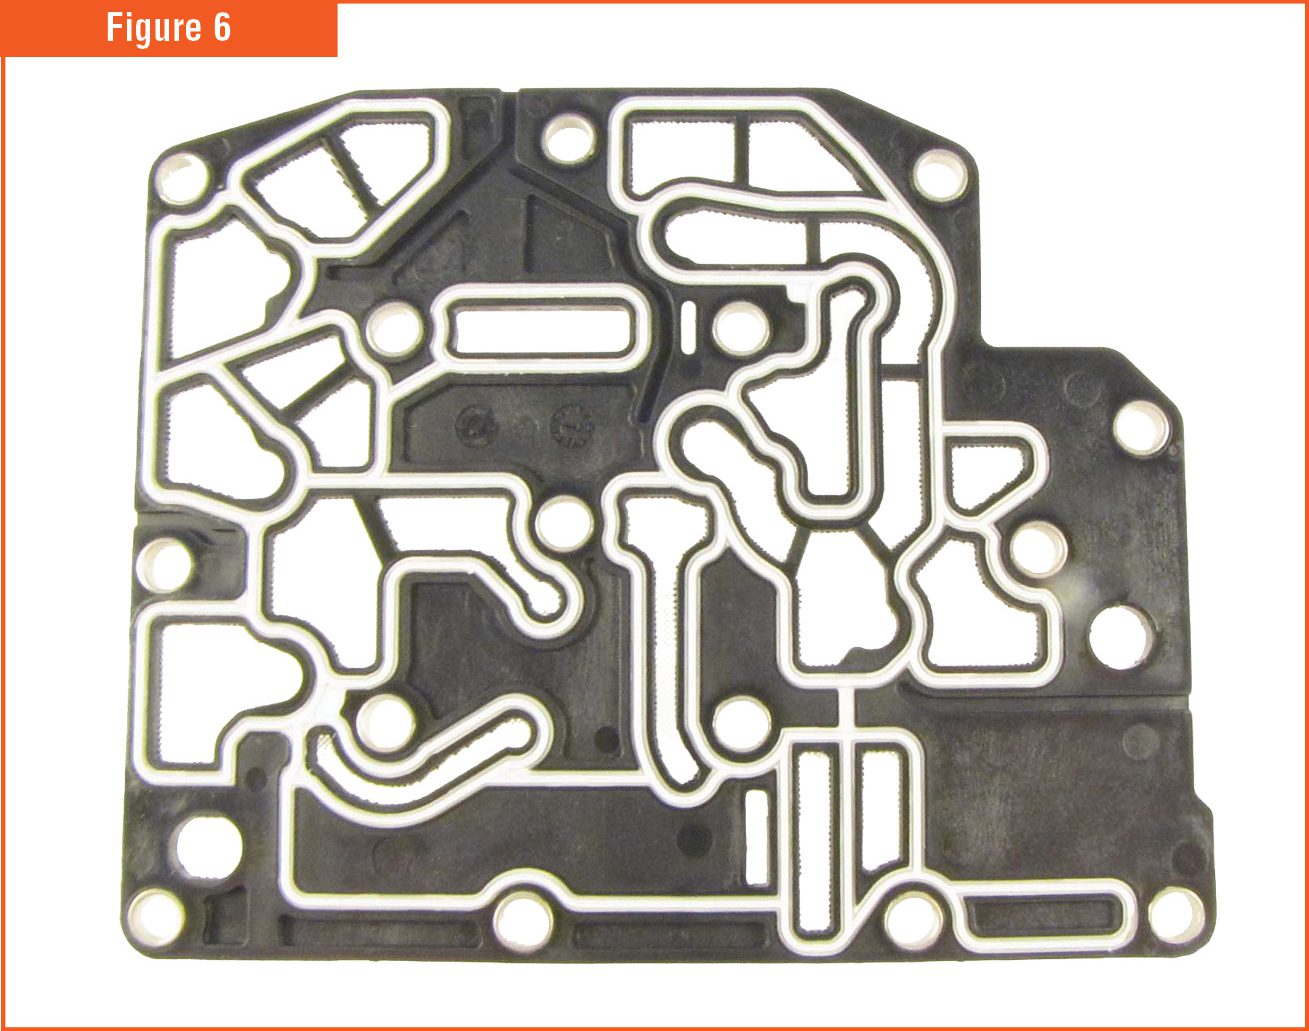 Gears Magazine - Dodge RFE Transmission Range Sensor Plate Confusion